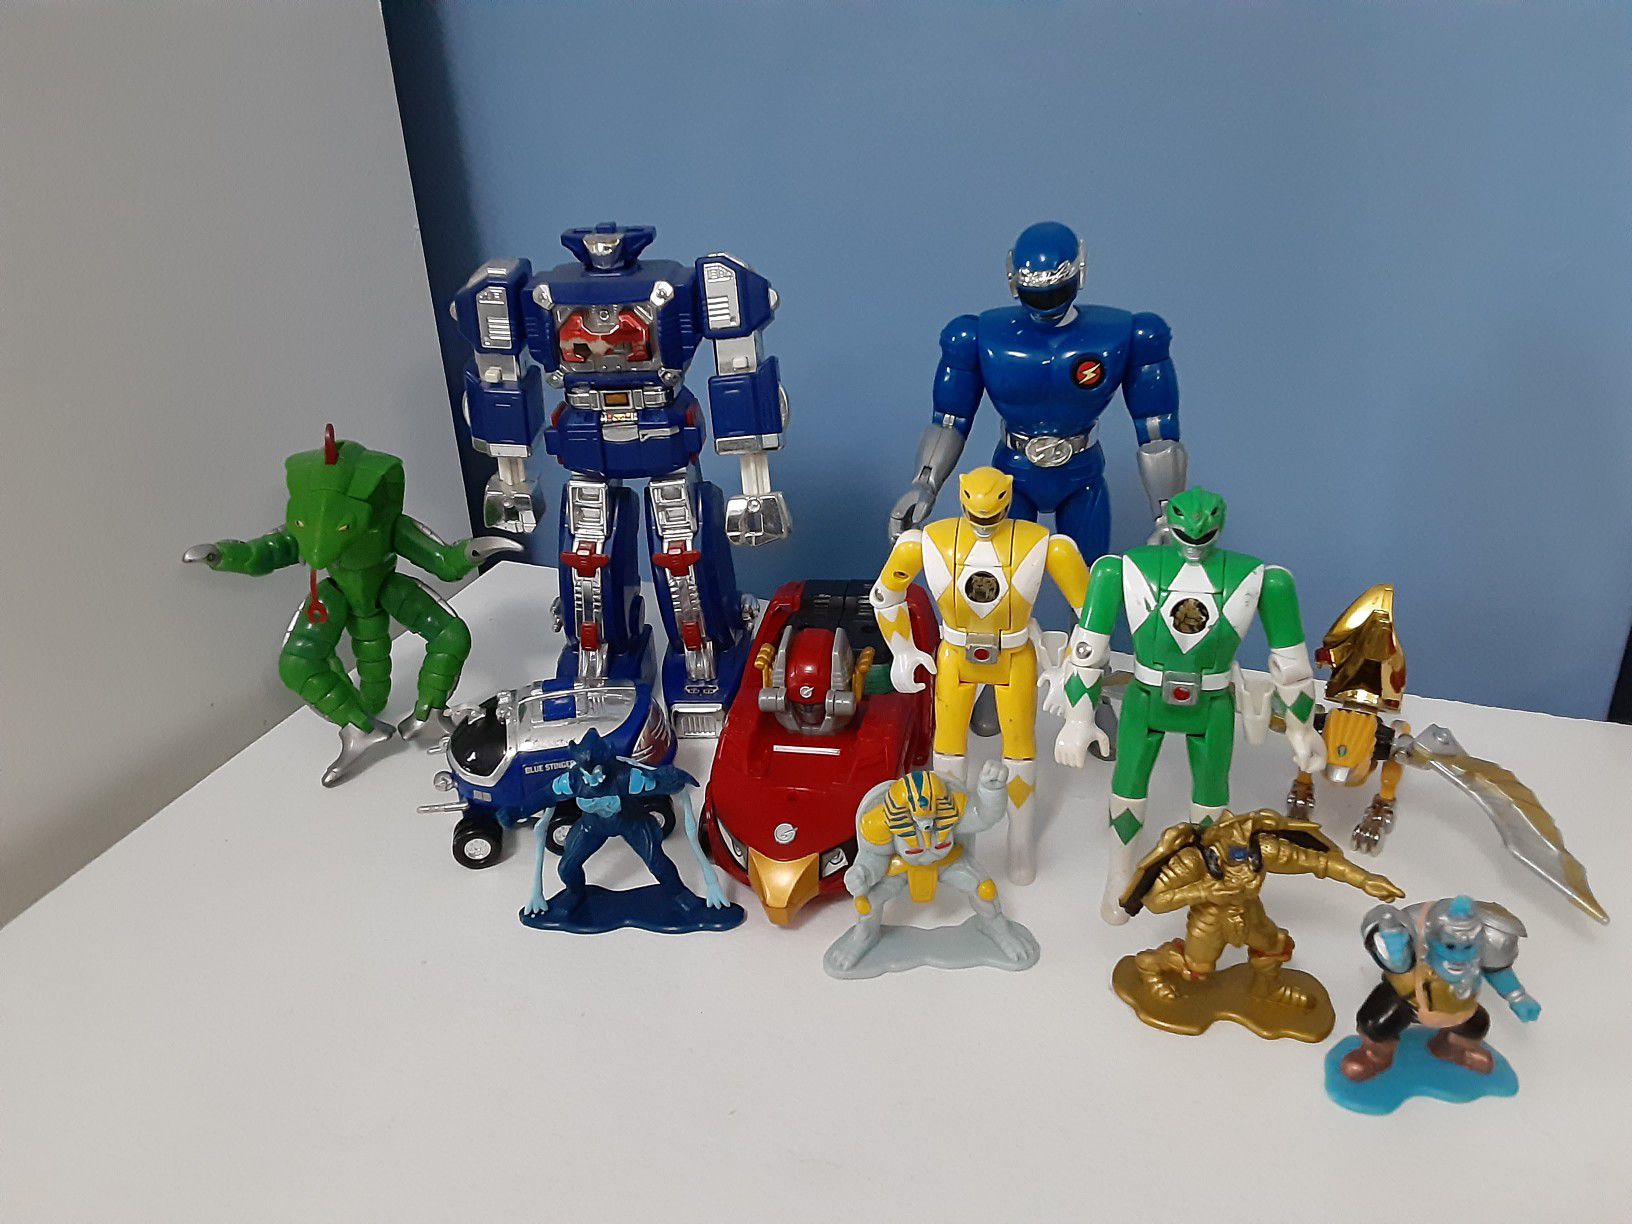 Vintage Power Rangers toys